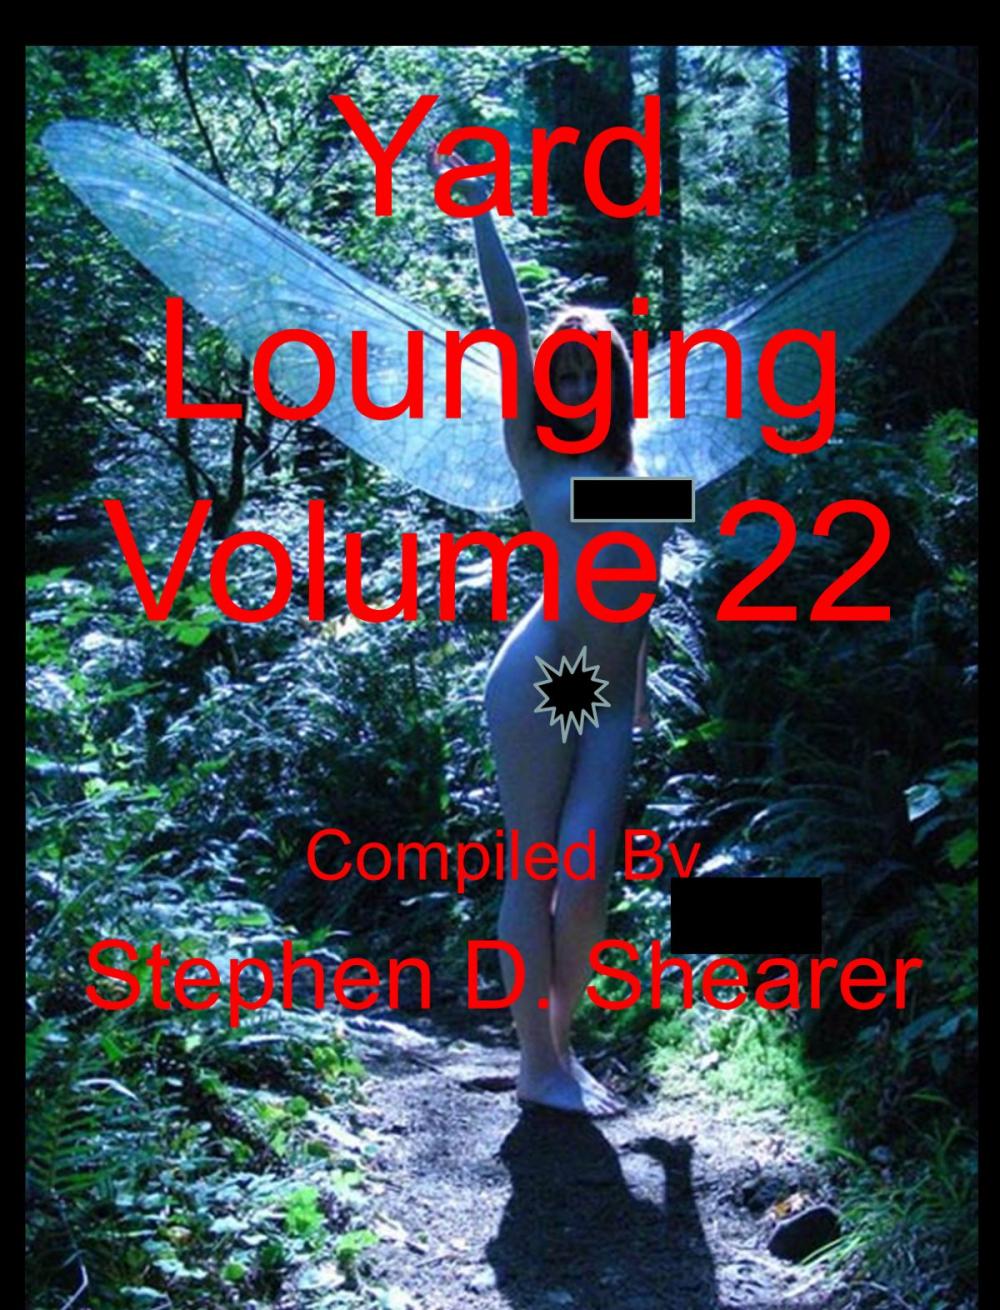 Big bigCover of Yard Lounging Volume 22